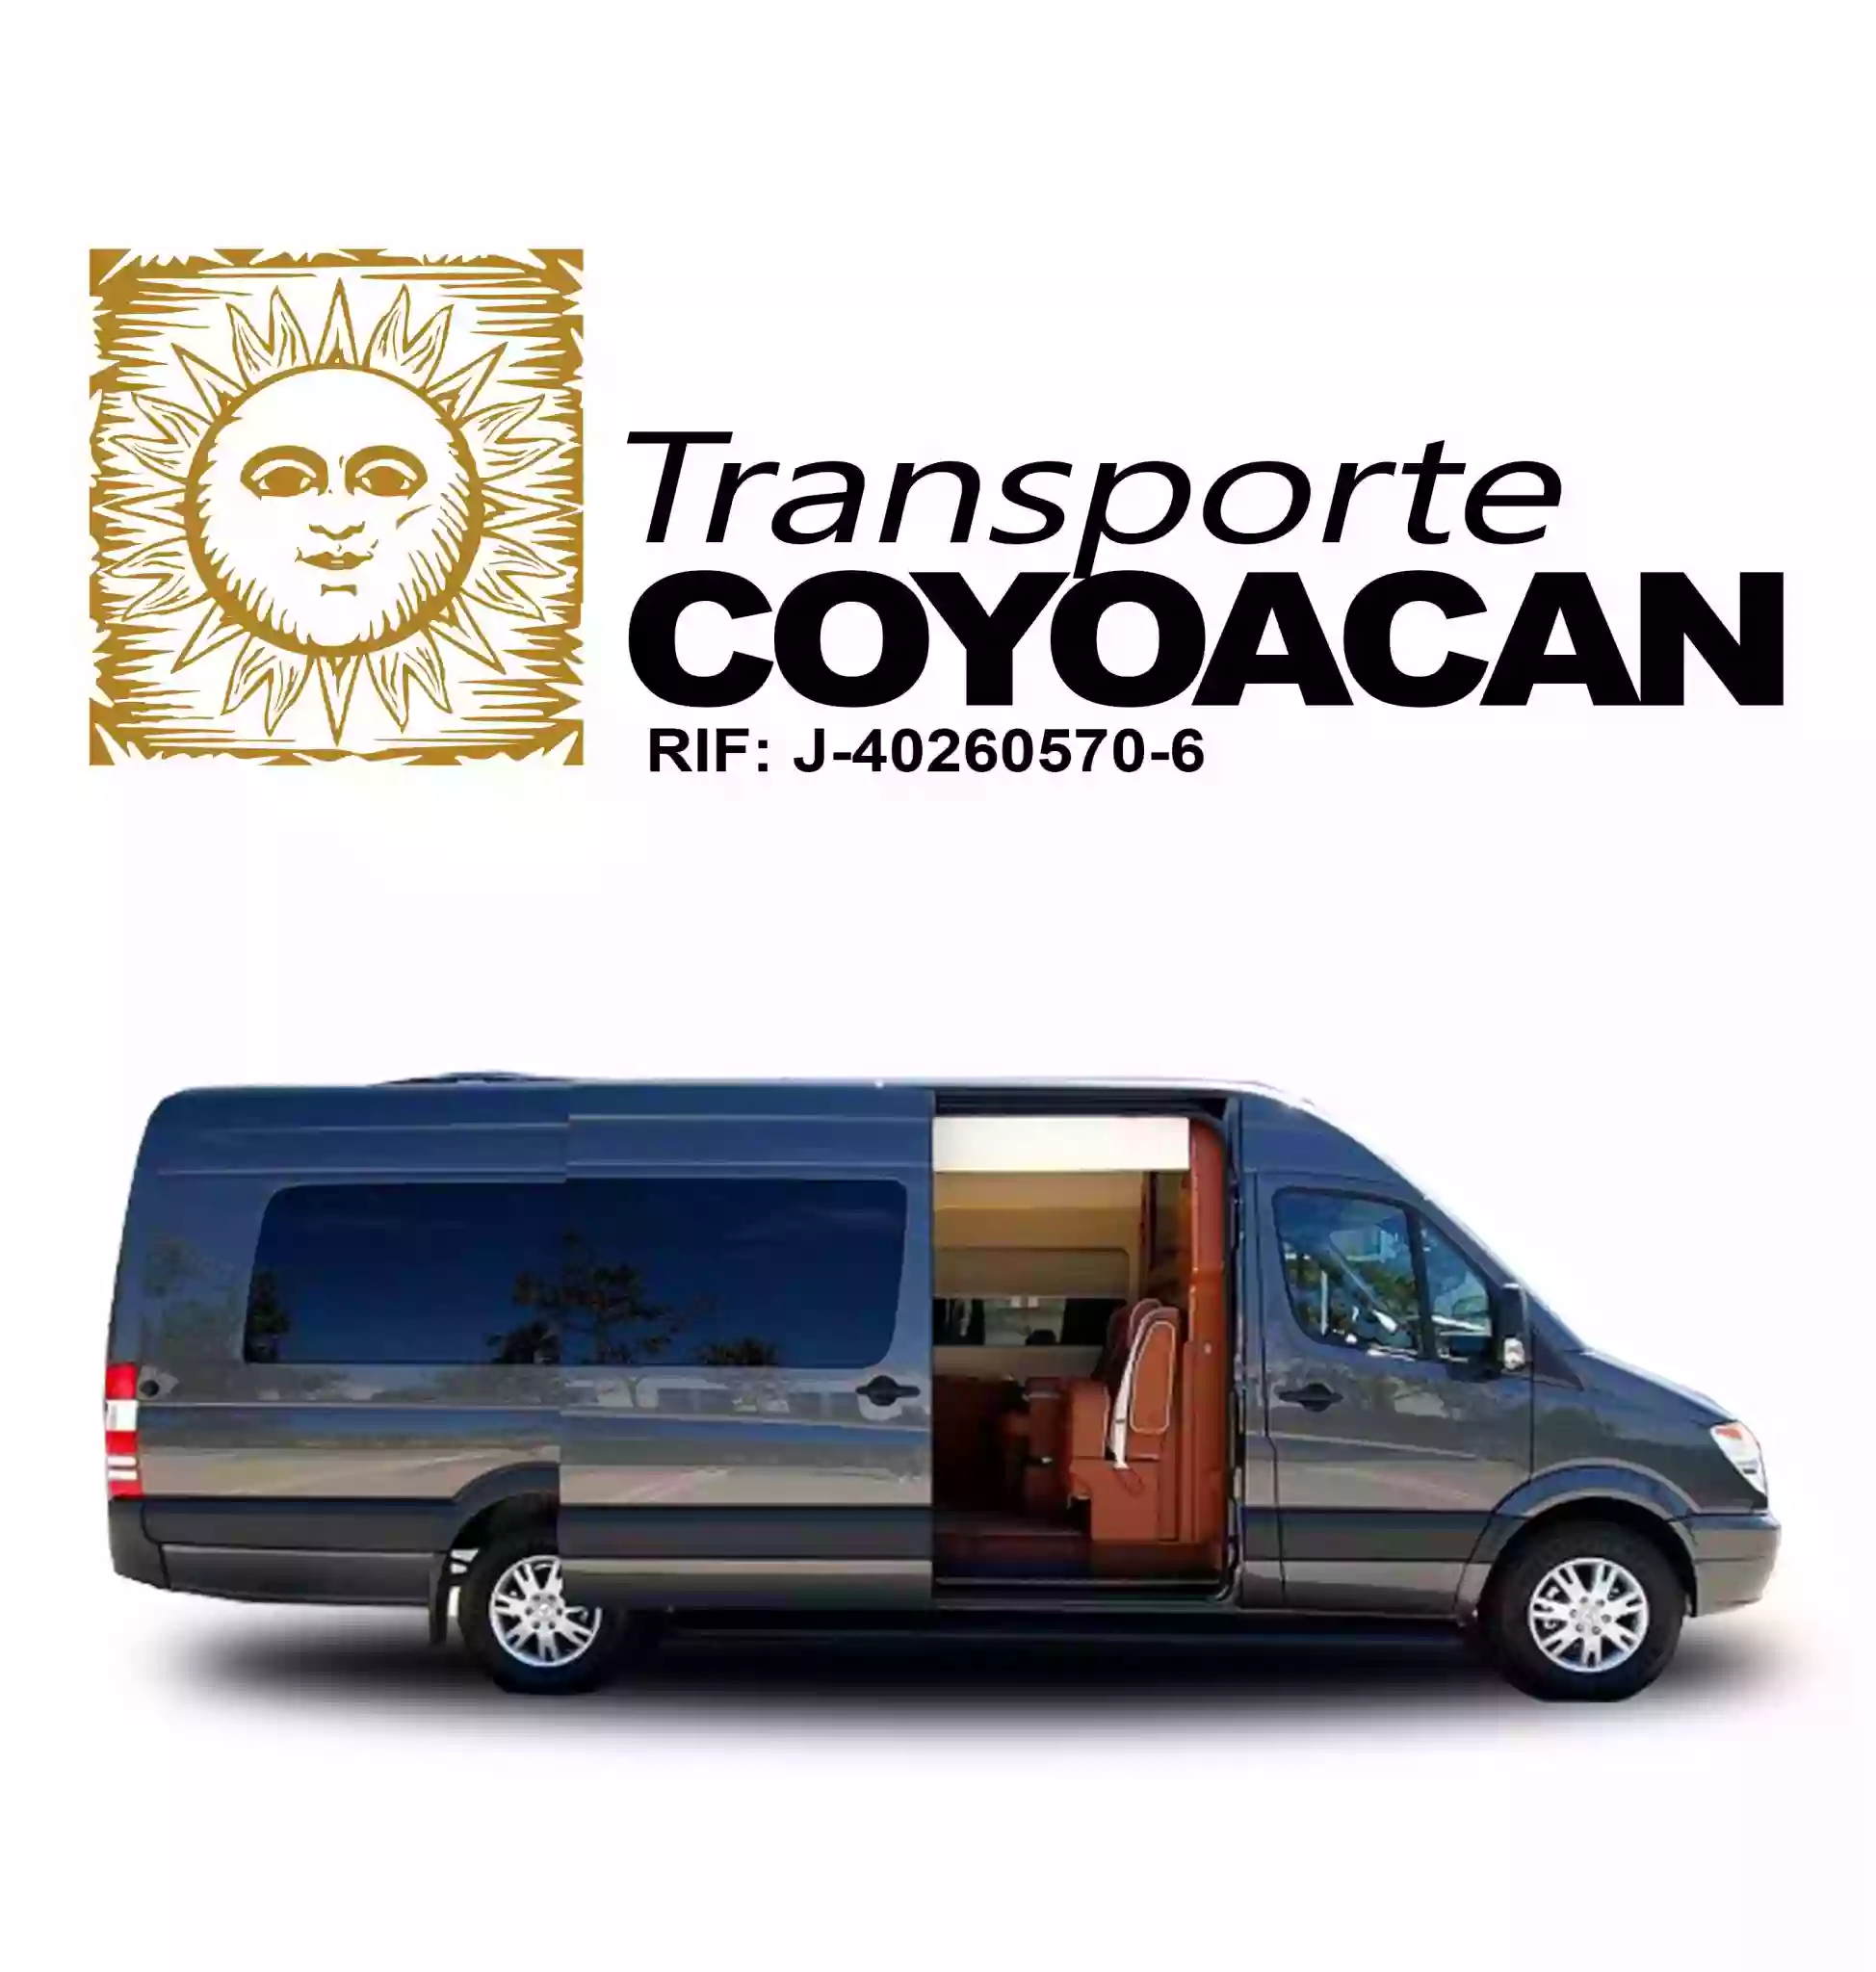 Transporte Coyoacan Madrid